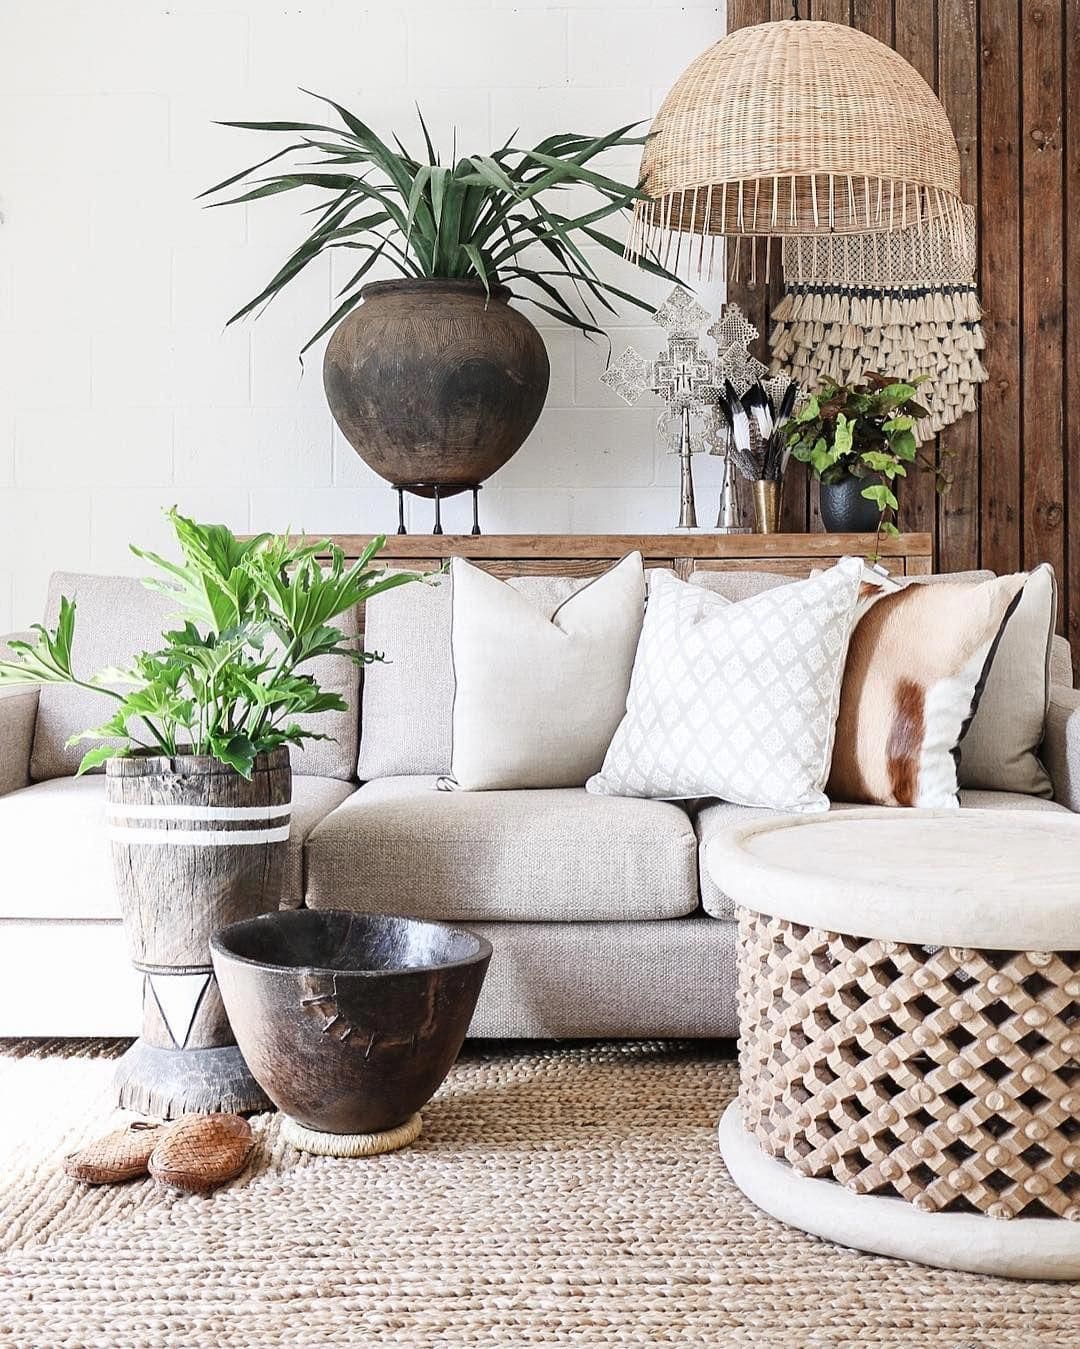 26 Stunningly Beautiful Tropical Home Decor Ideas - 91